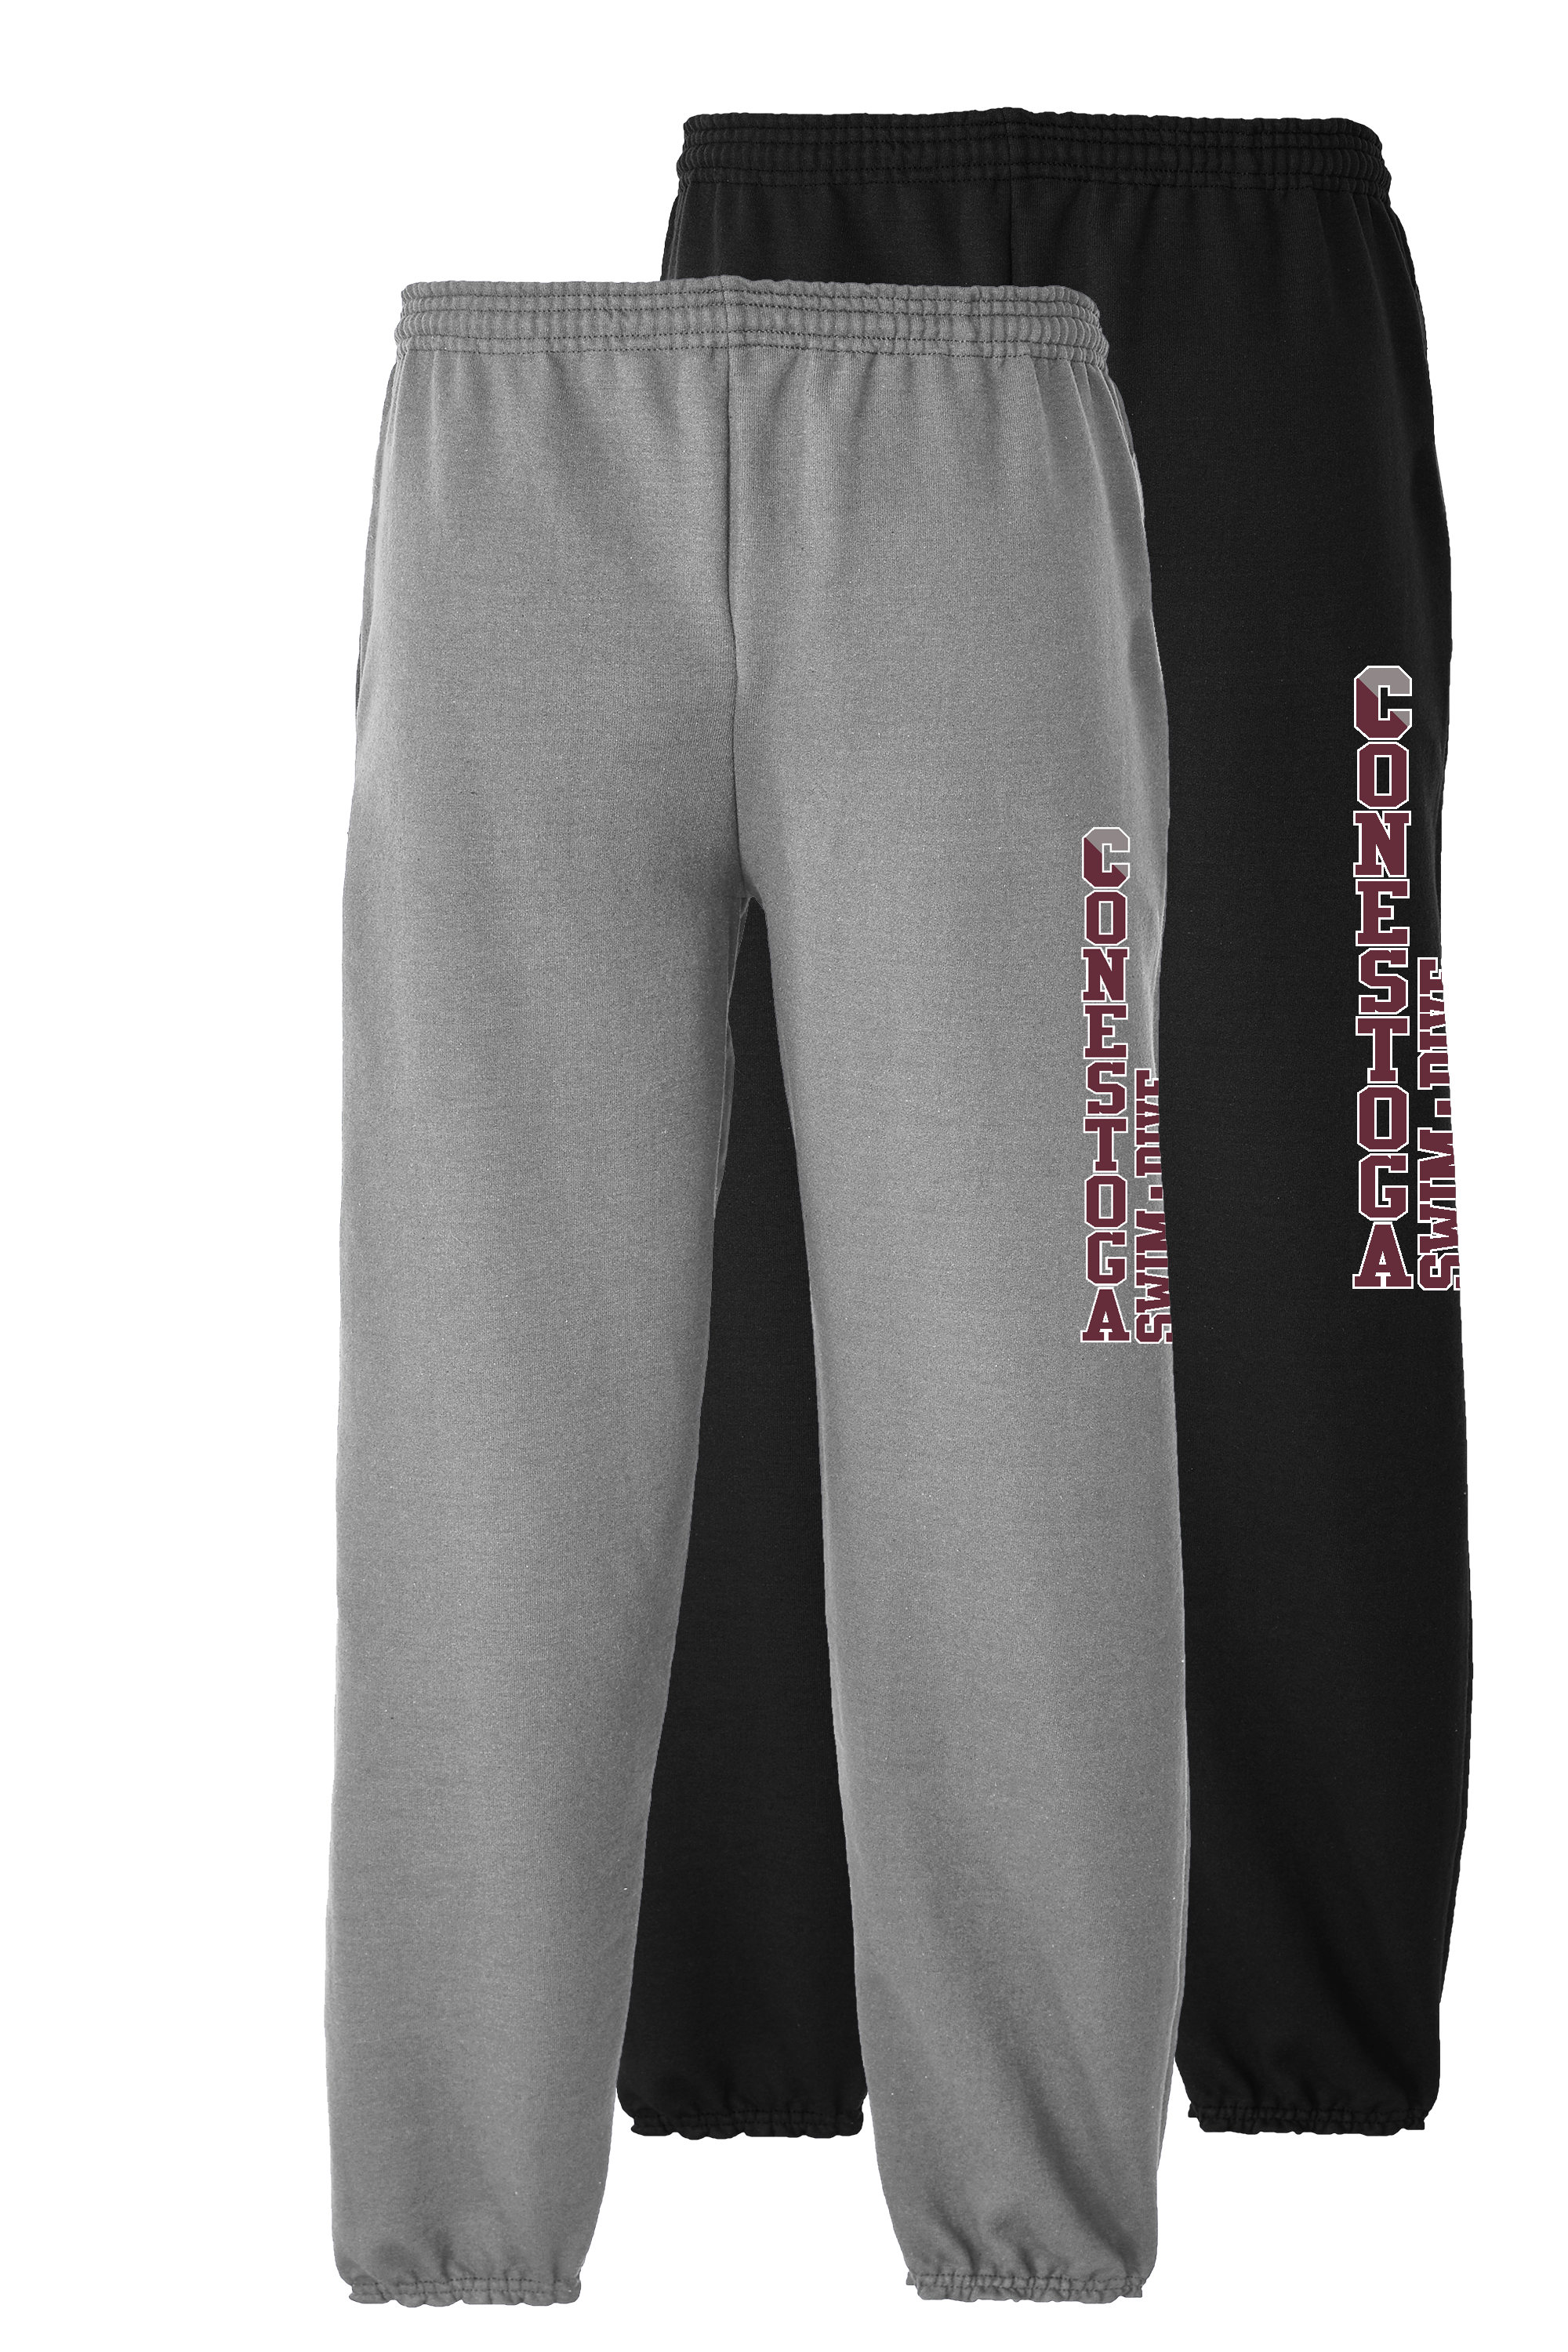 18. CHSD Fleece Cuffed Sweatpants with Pockets